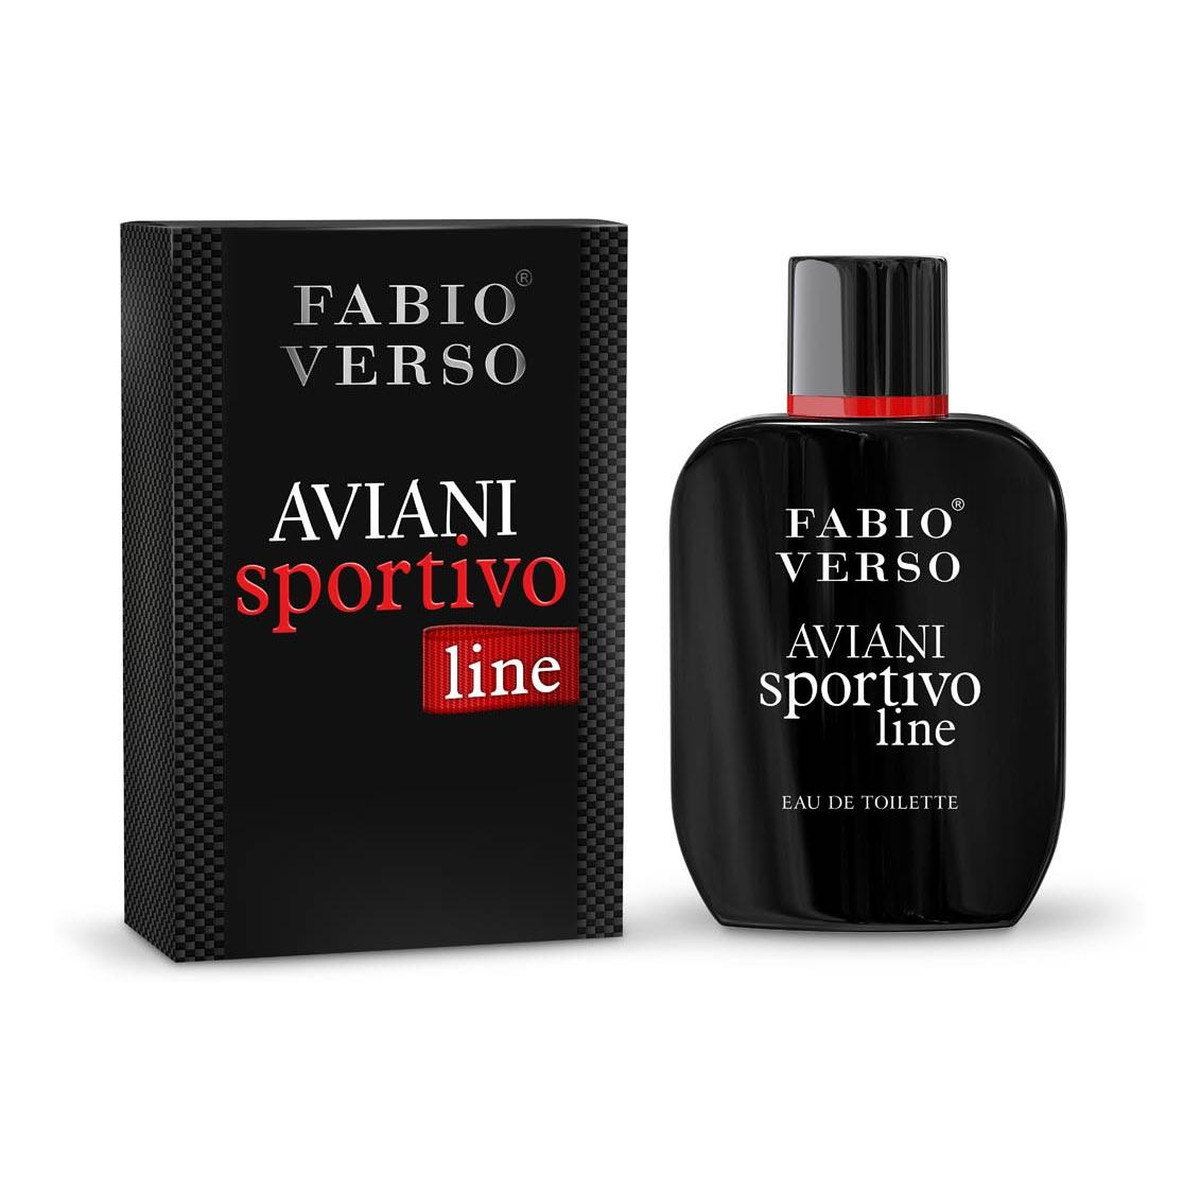 Fabio Verso Aviani Sportivo Woda toaletowa 100ml